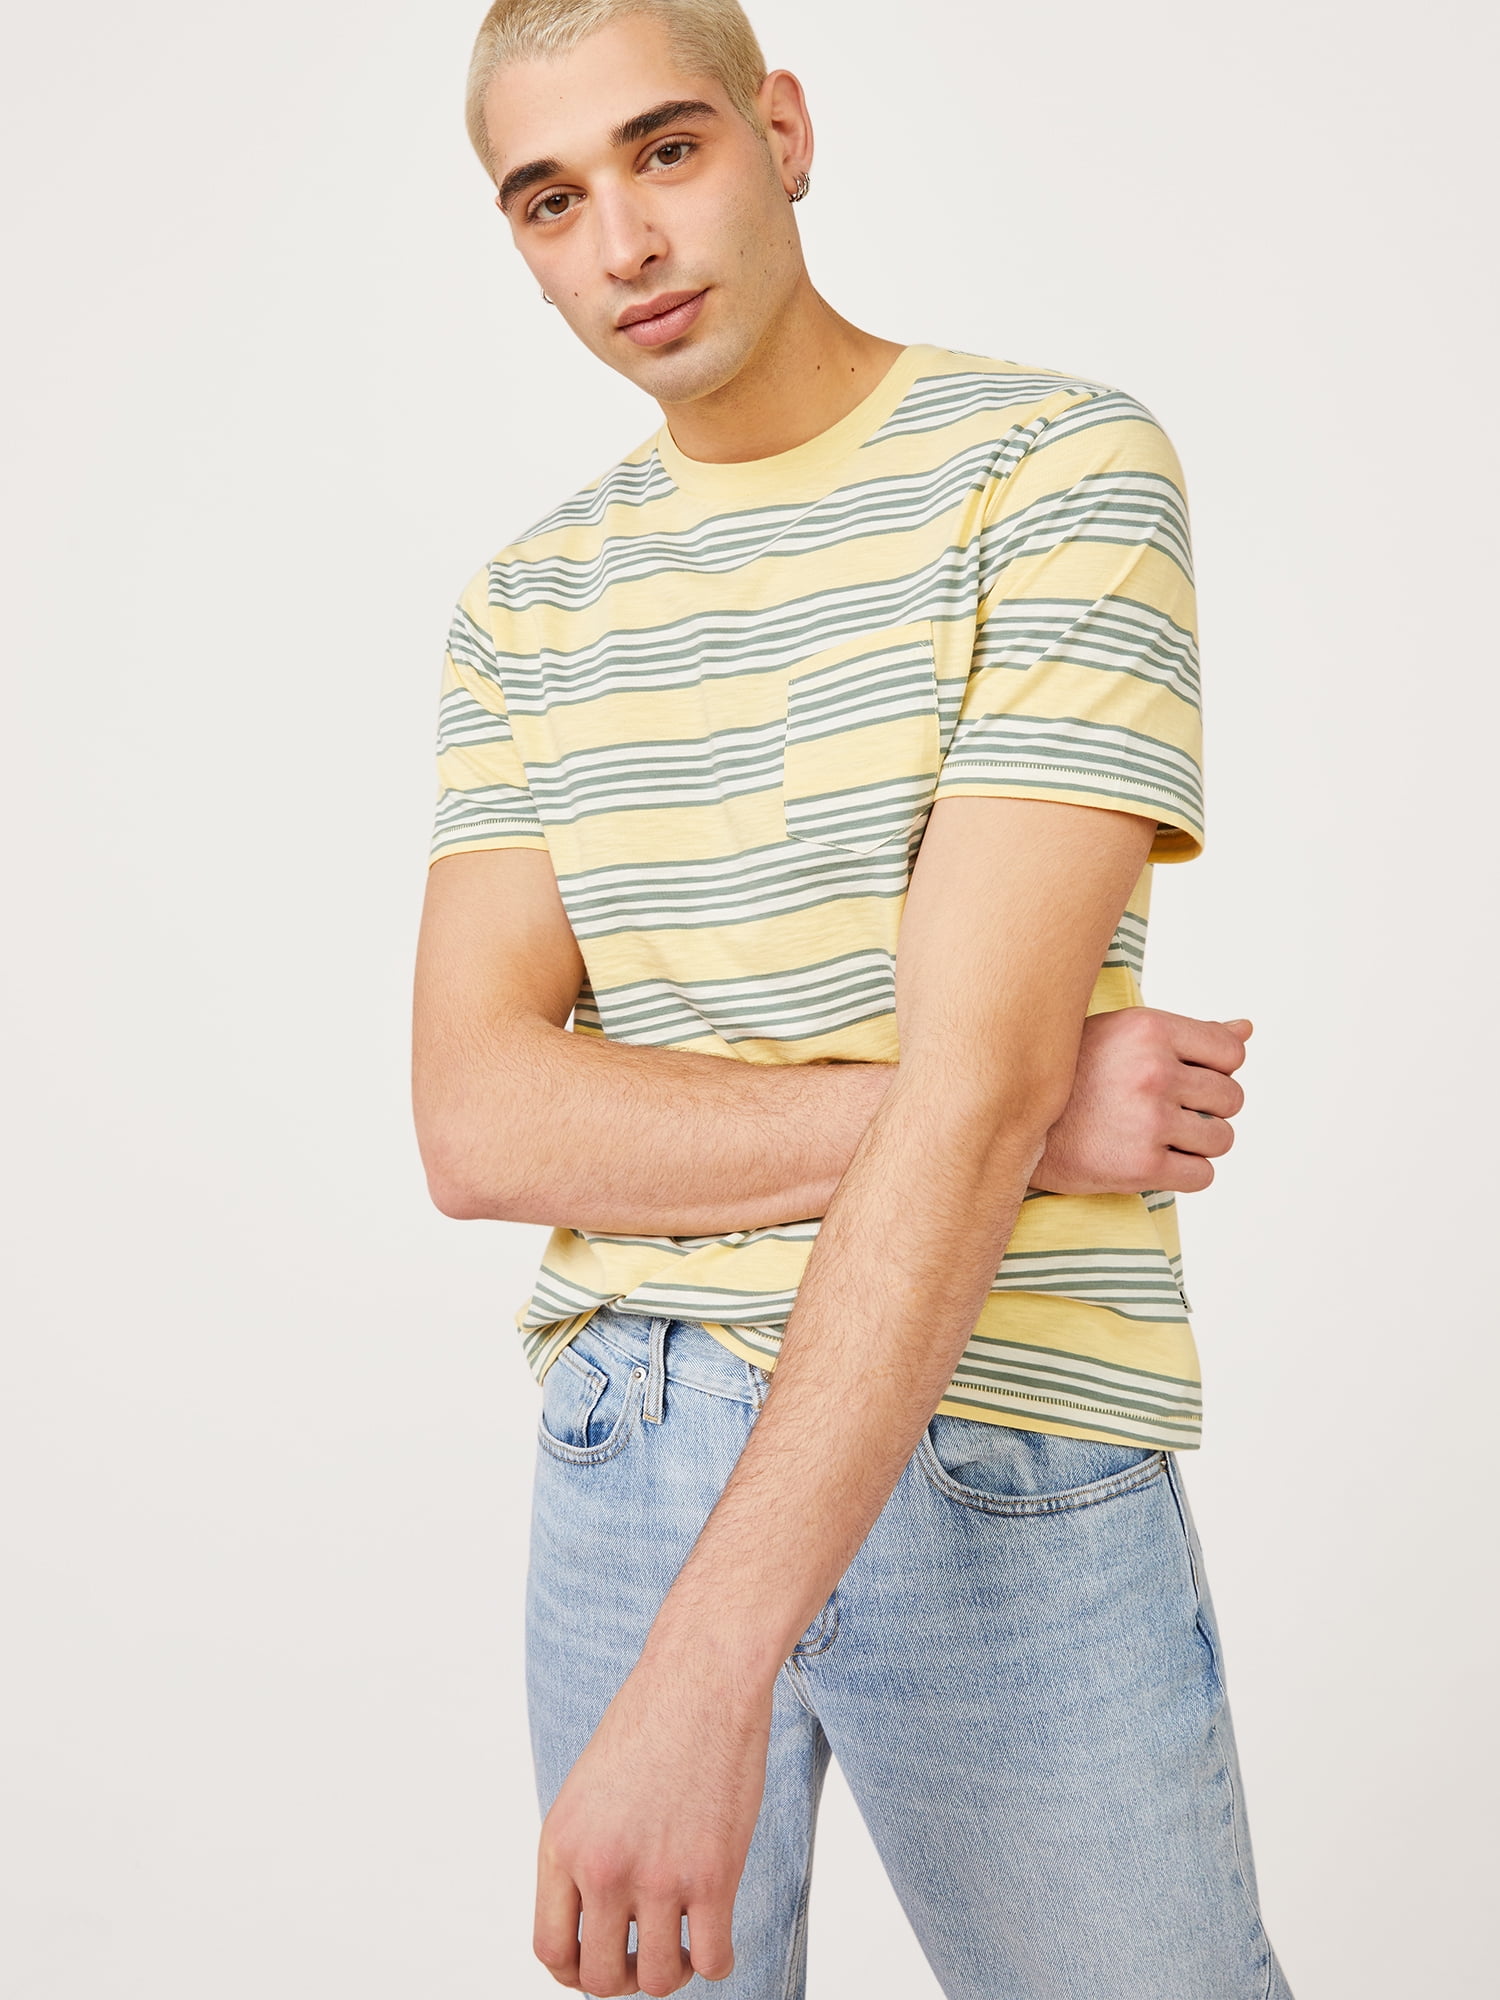 Free Assembly Men's Short Sleeve Striped Pocket T-Shirt 